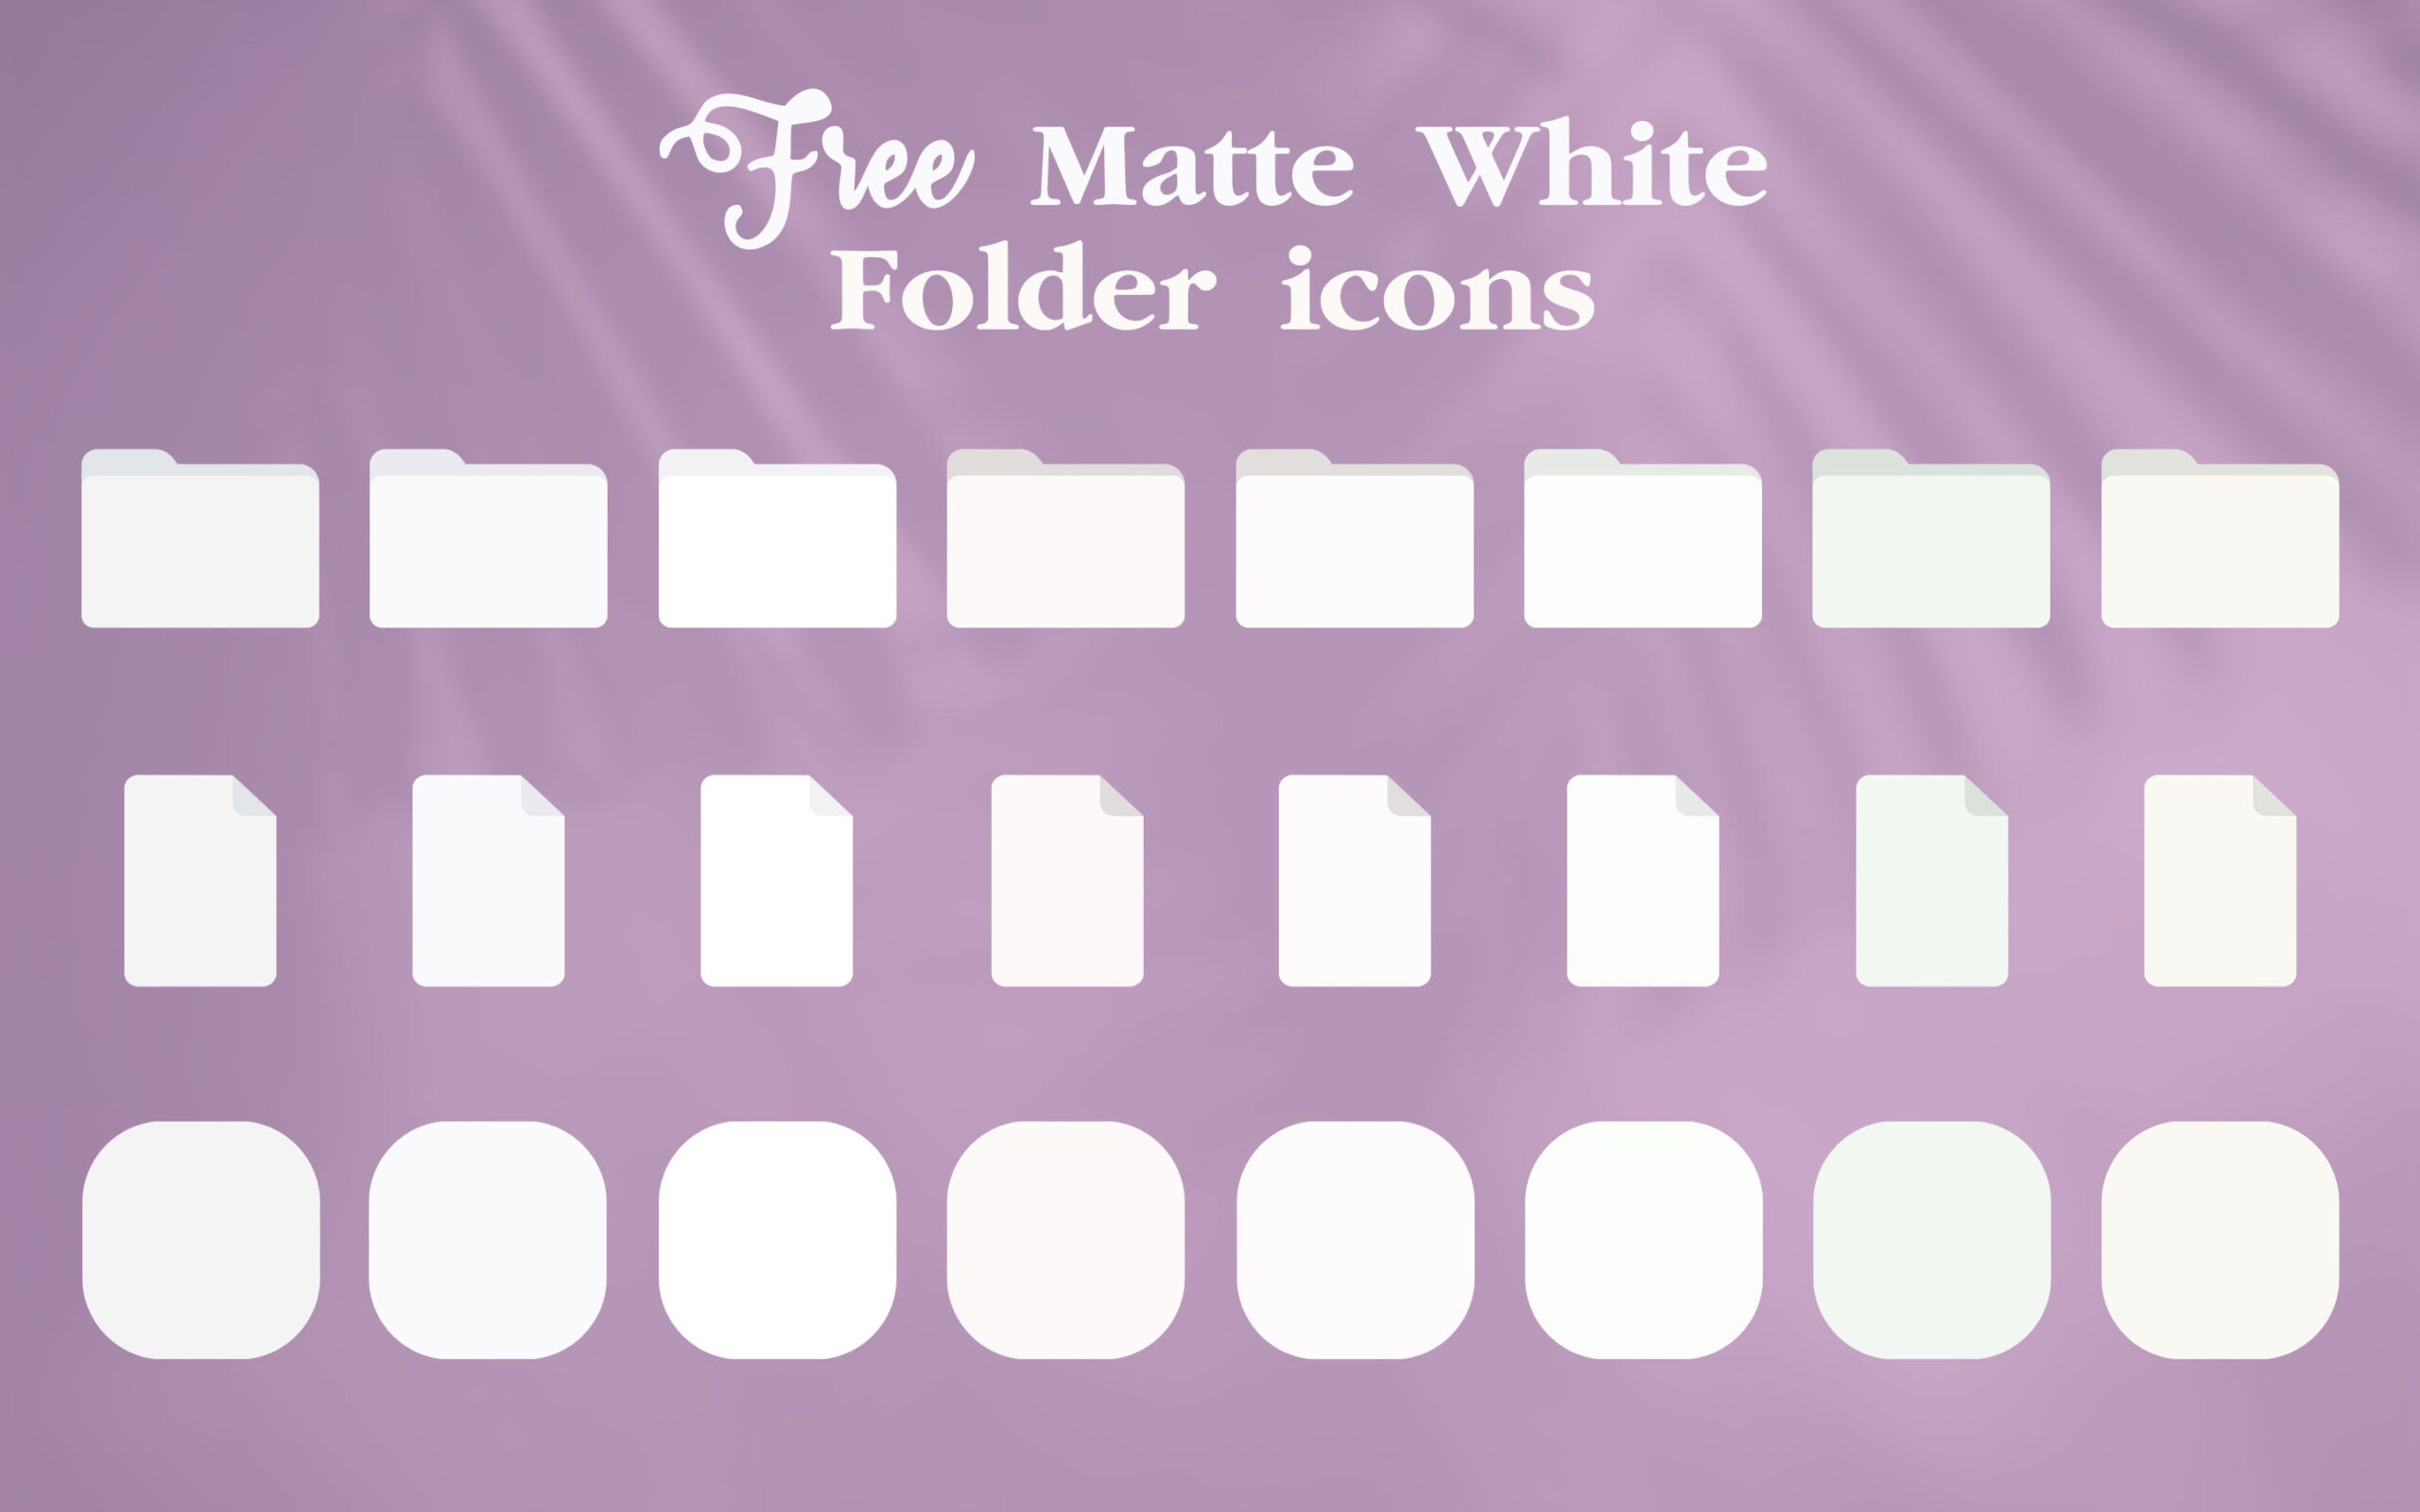 matte white folder icons 2